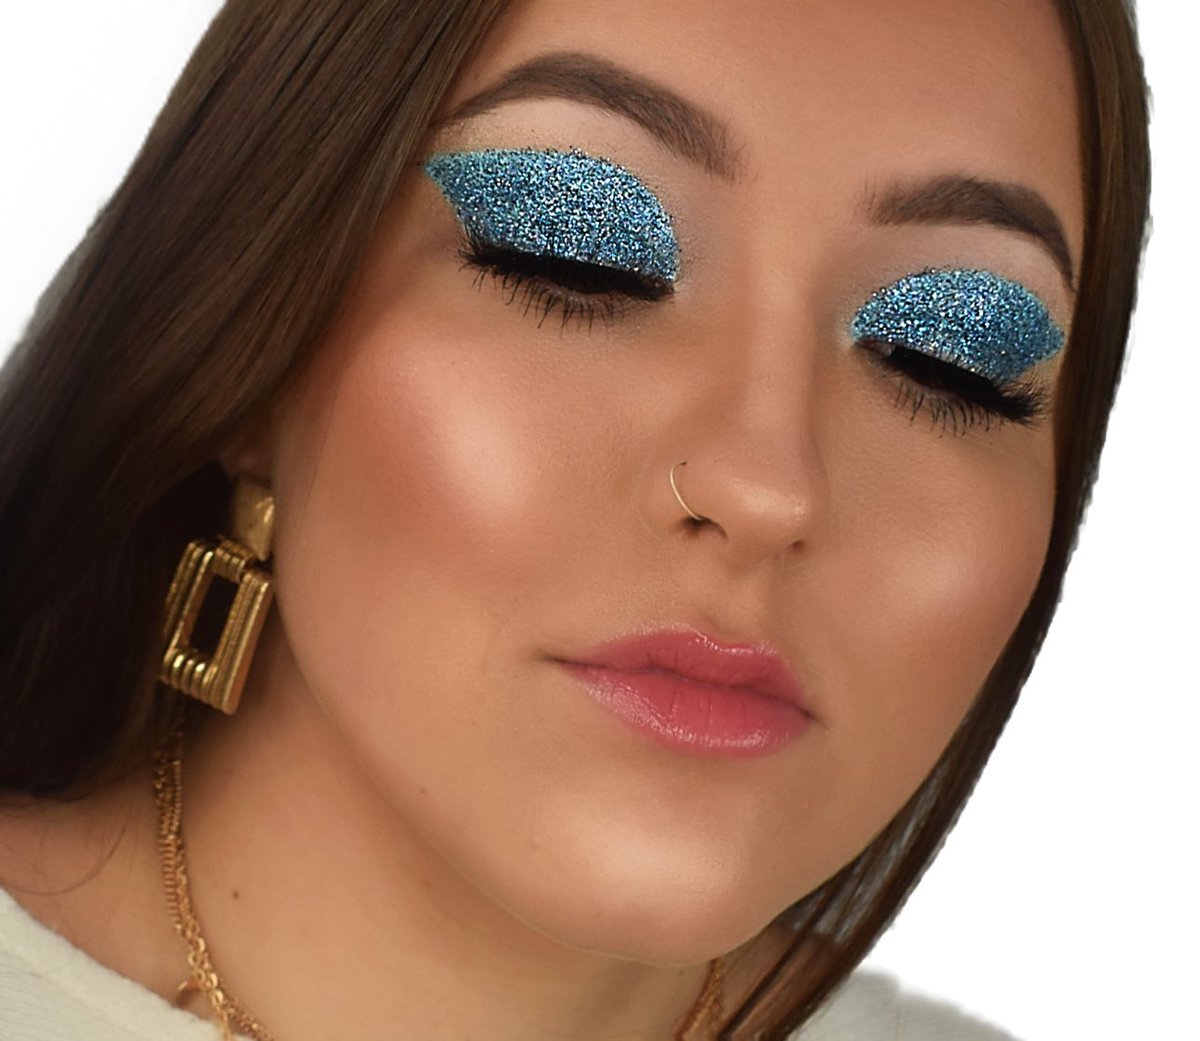 GLITTER! ✨ @PIXIBeauty Blue Pearl Quad is something else 💙🔥 #glittereyemakeup #pixibeauty #makeuplook